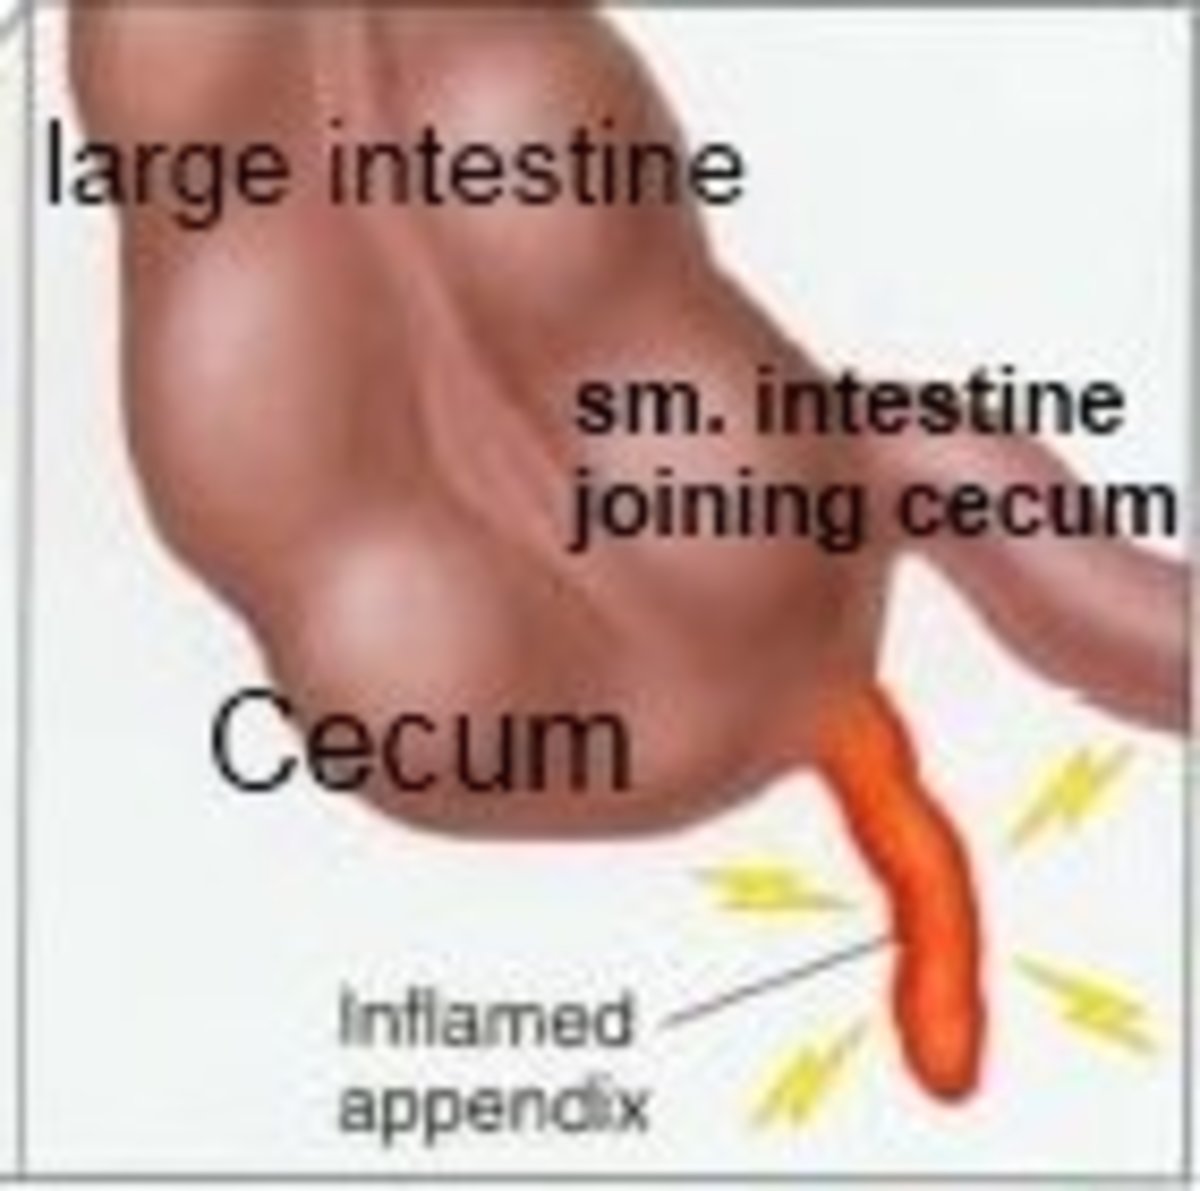 Inflamed appendix